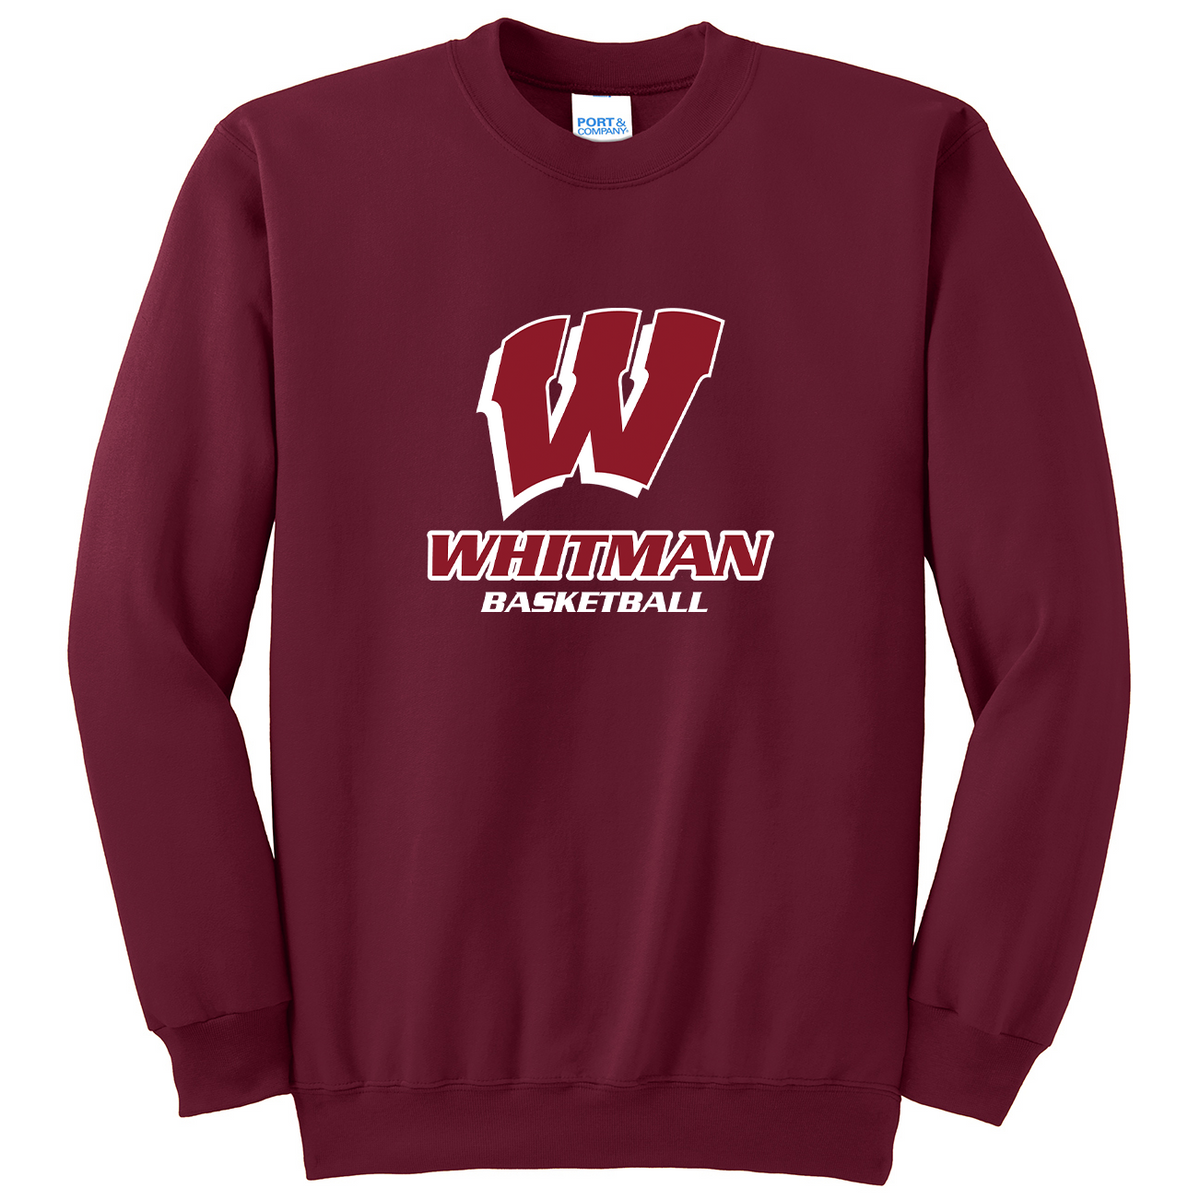 Whitman Basketball Crew Neck Sweater